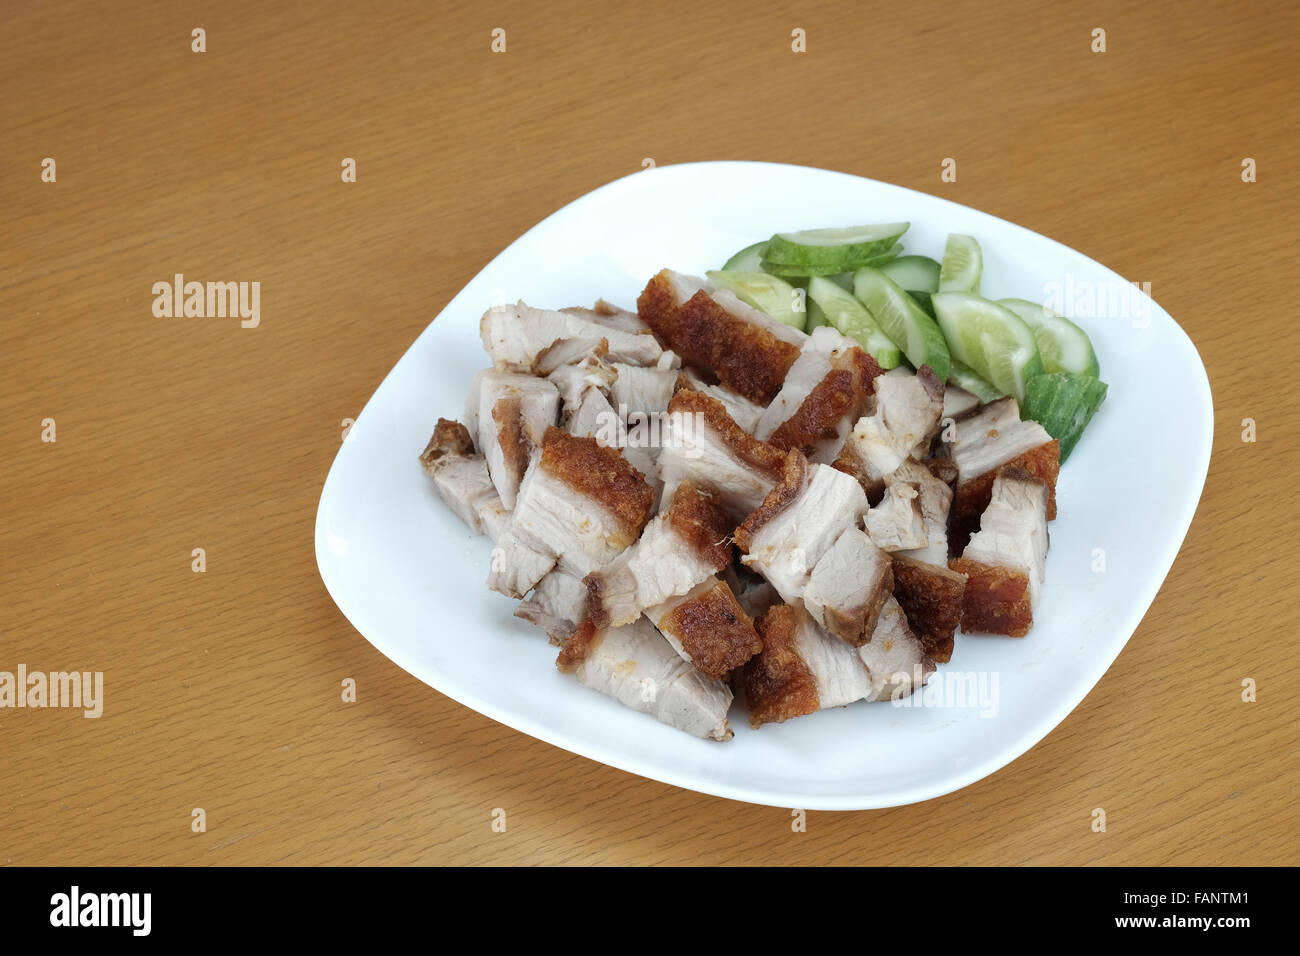 Dish of crispy pork on wood table Stock Photo